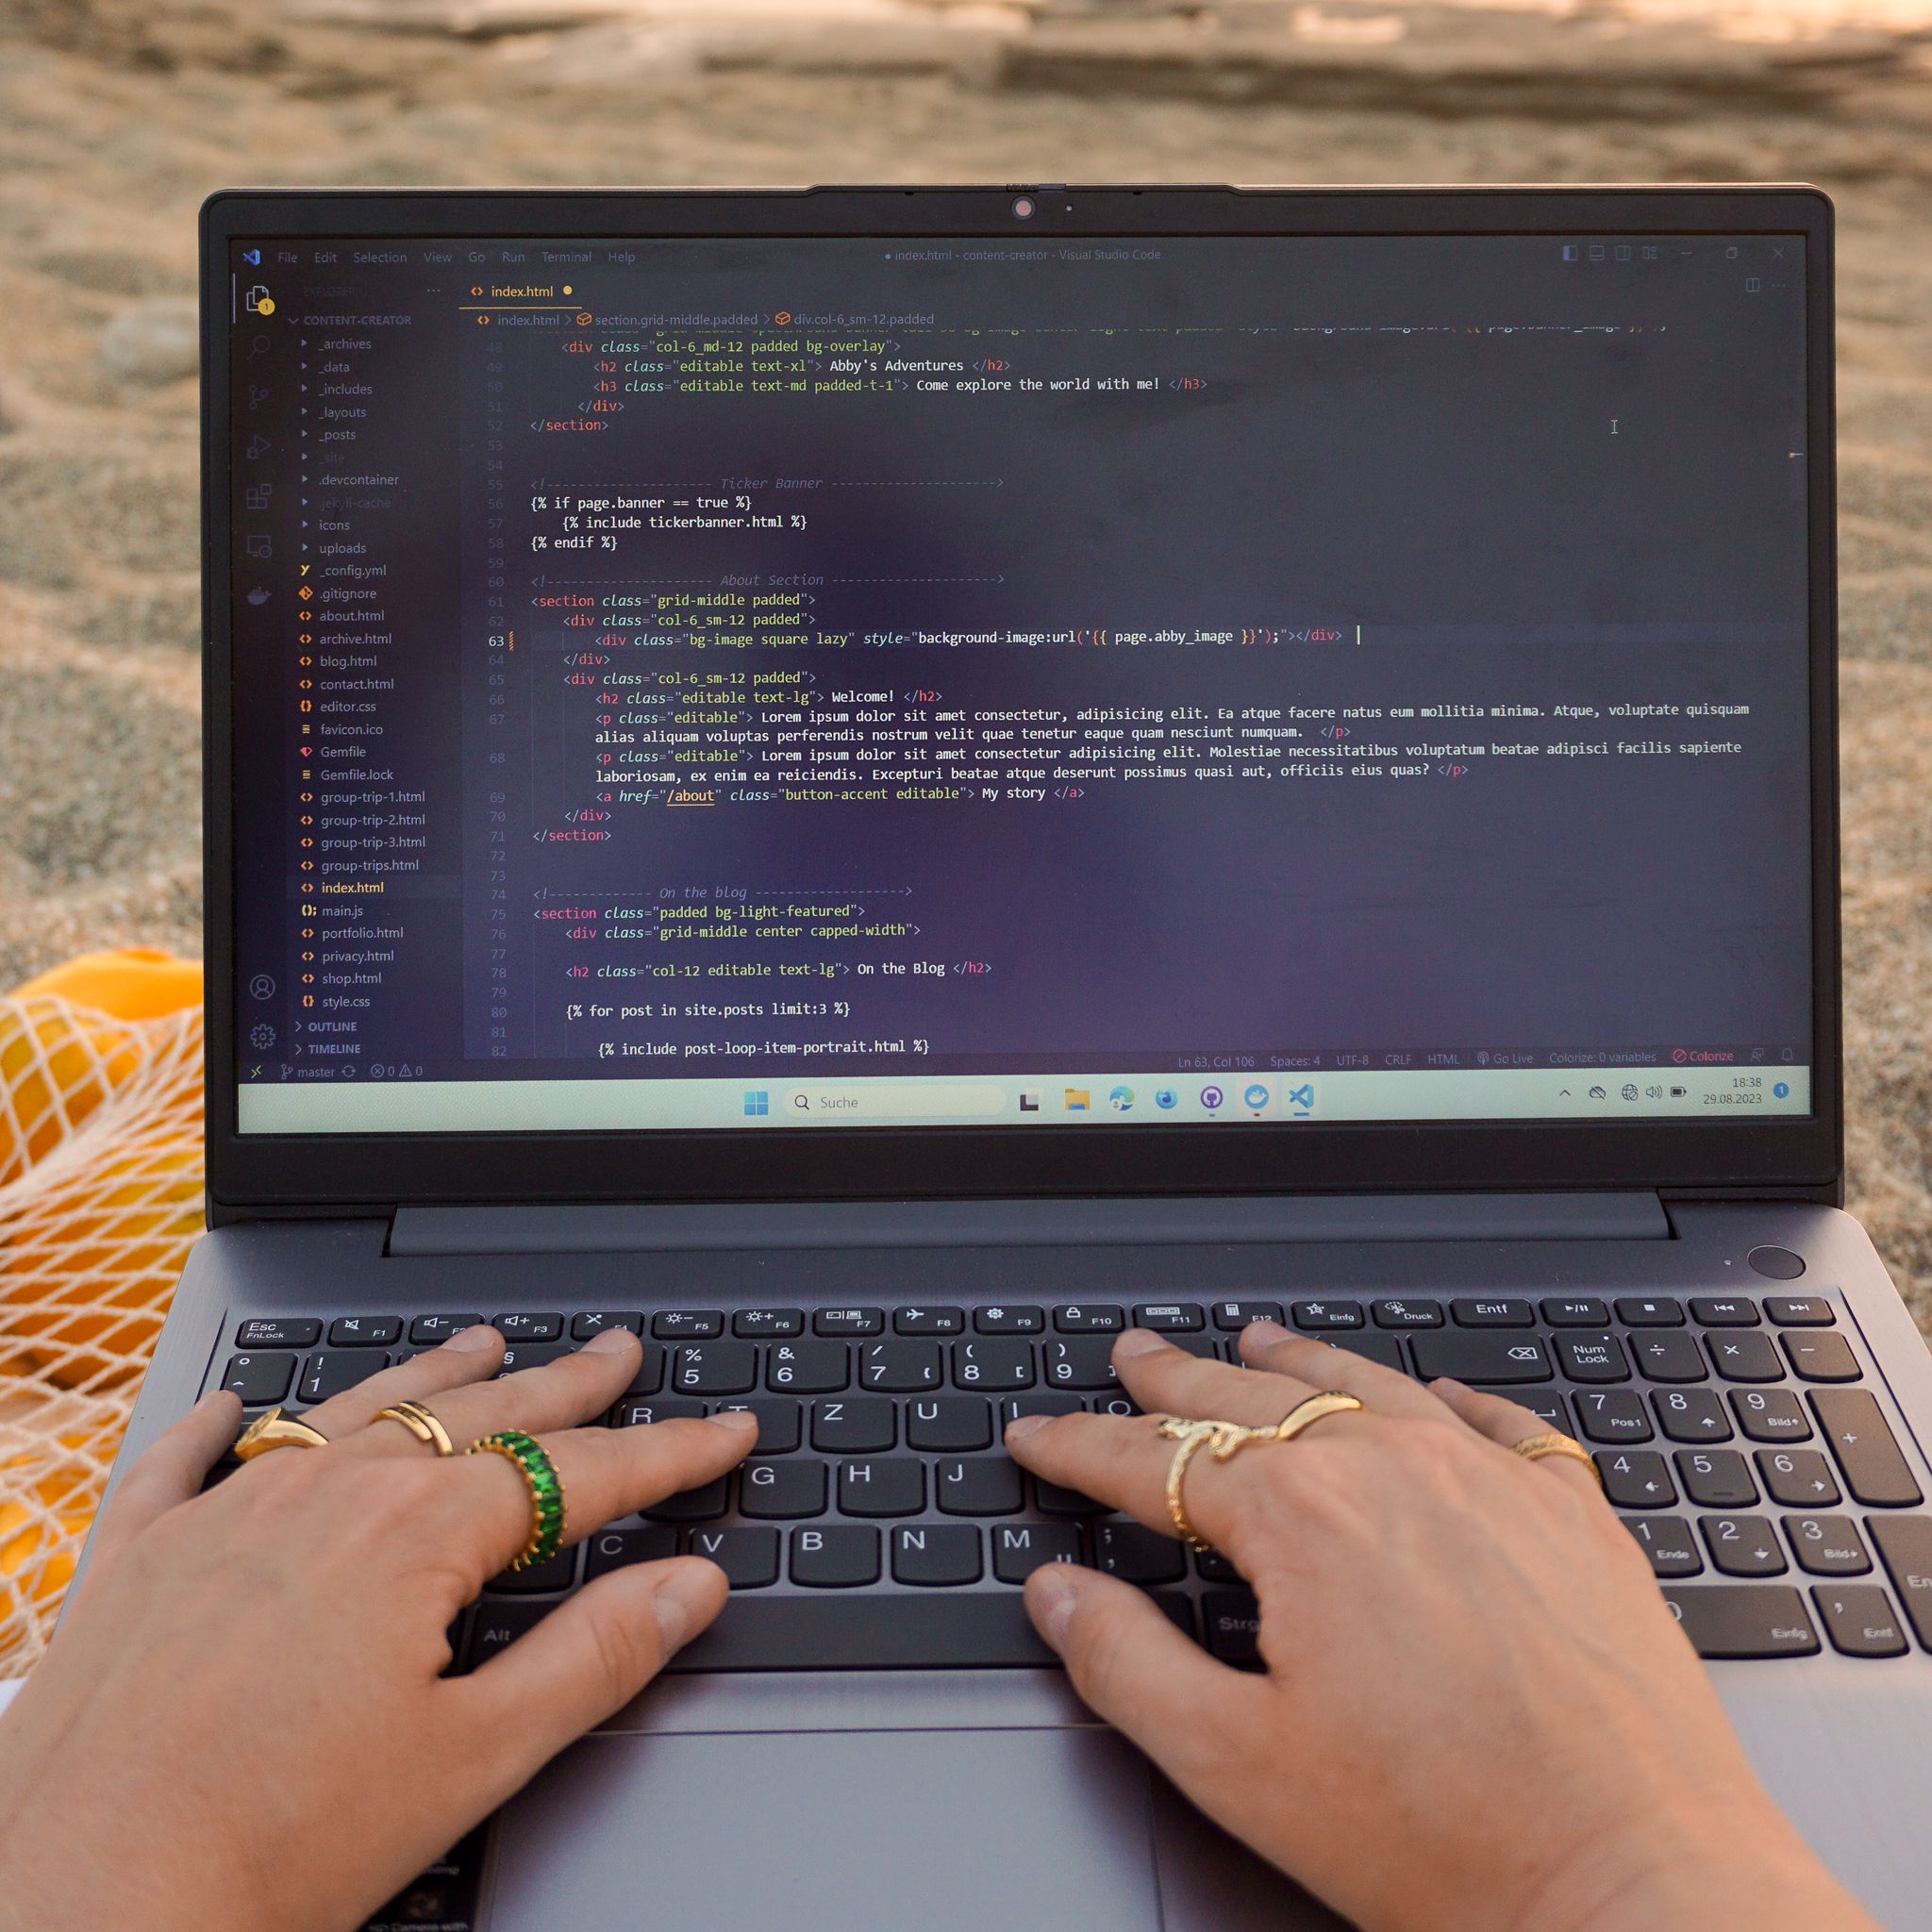 Laptopscreen showing a coding program